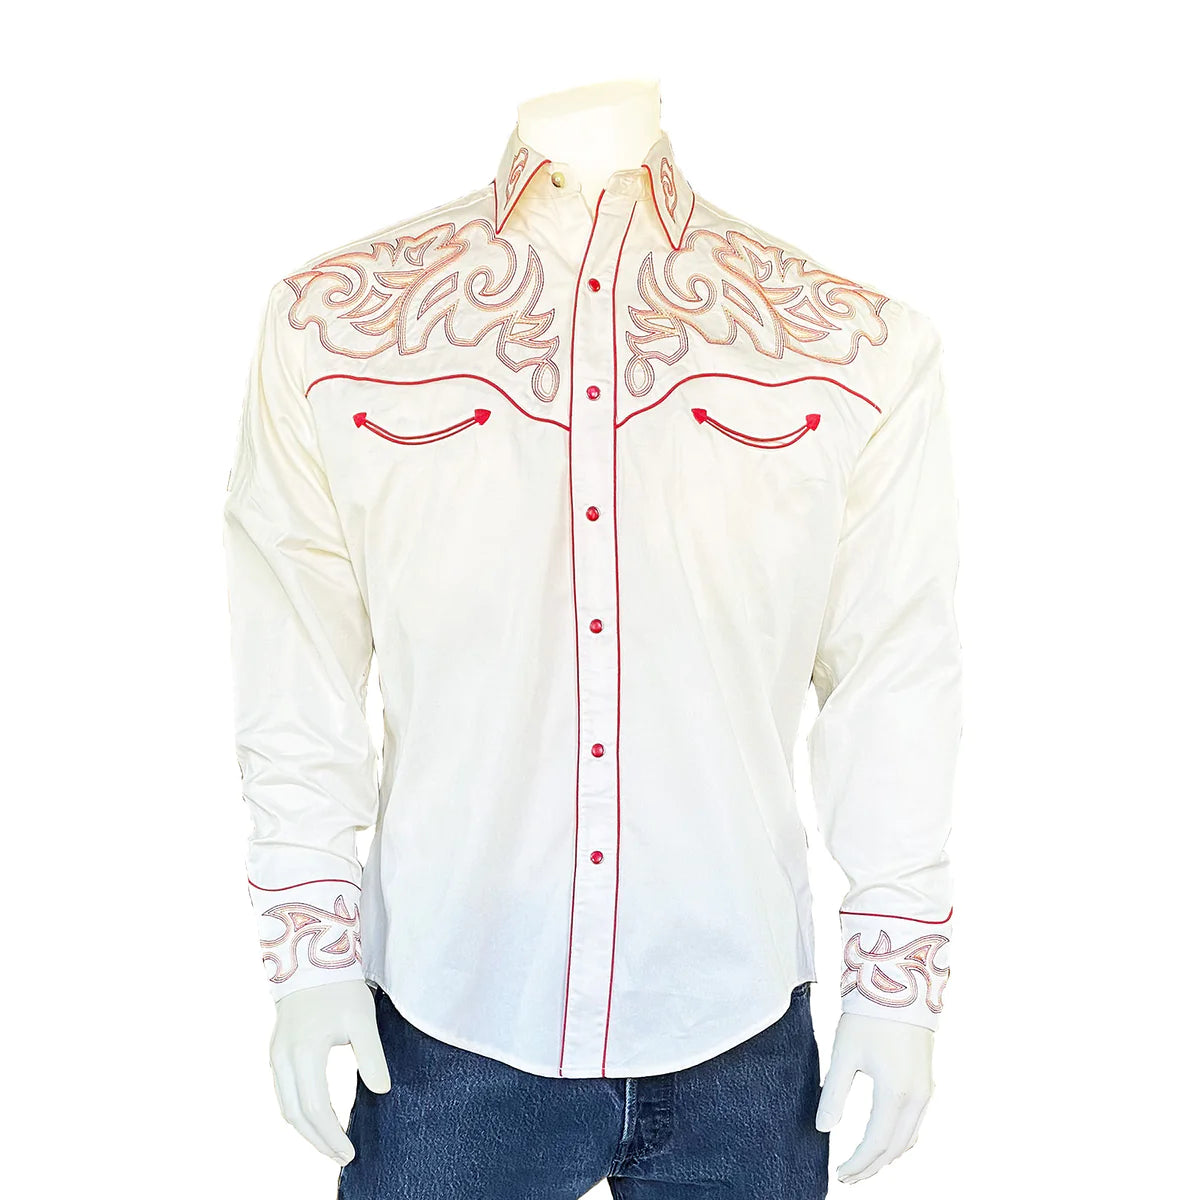 Rockmount Men's Vintage Inspired Boot Top Shirt Ivory Front